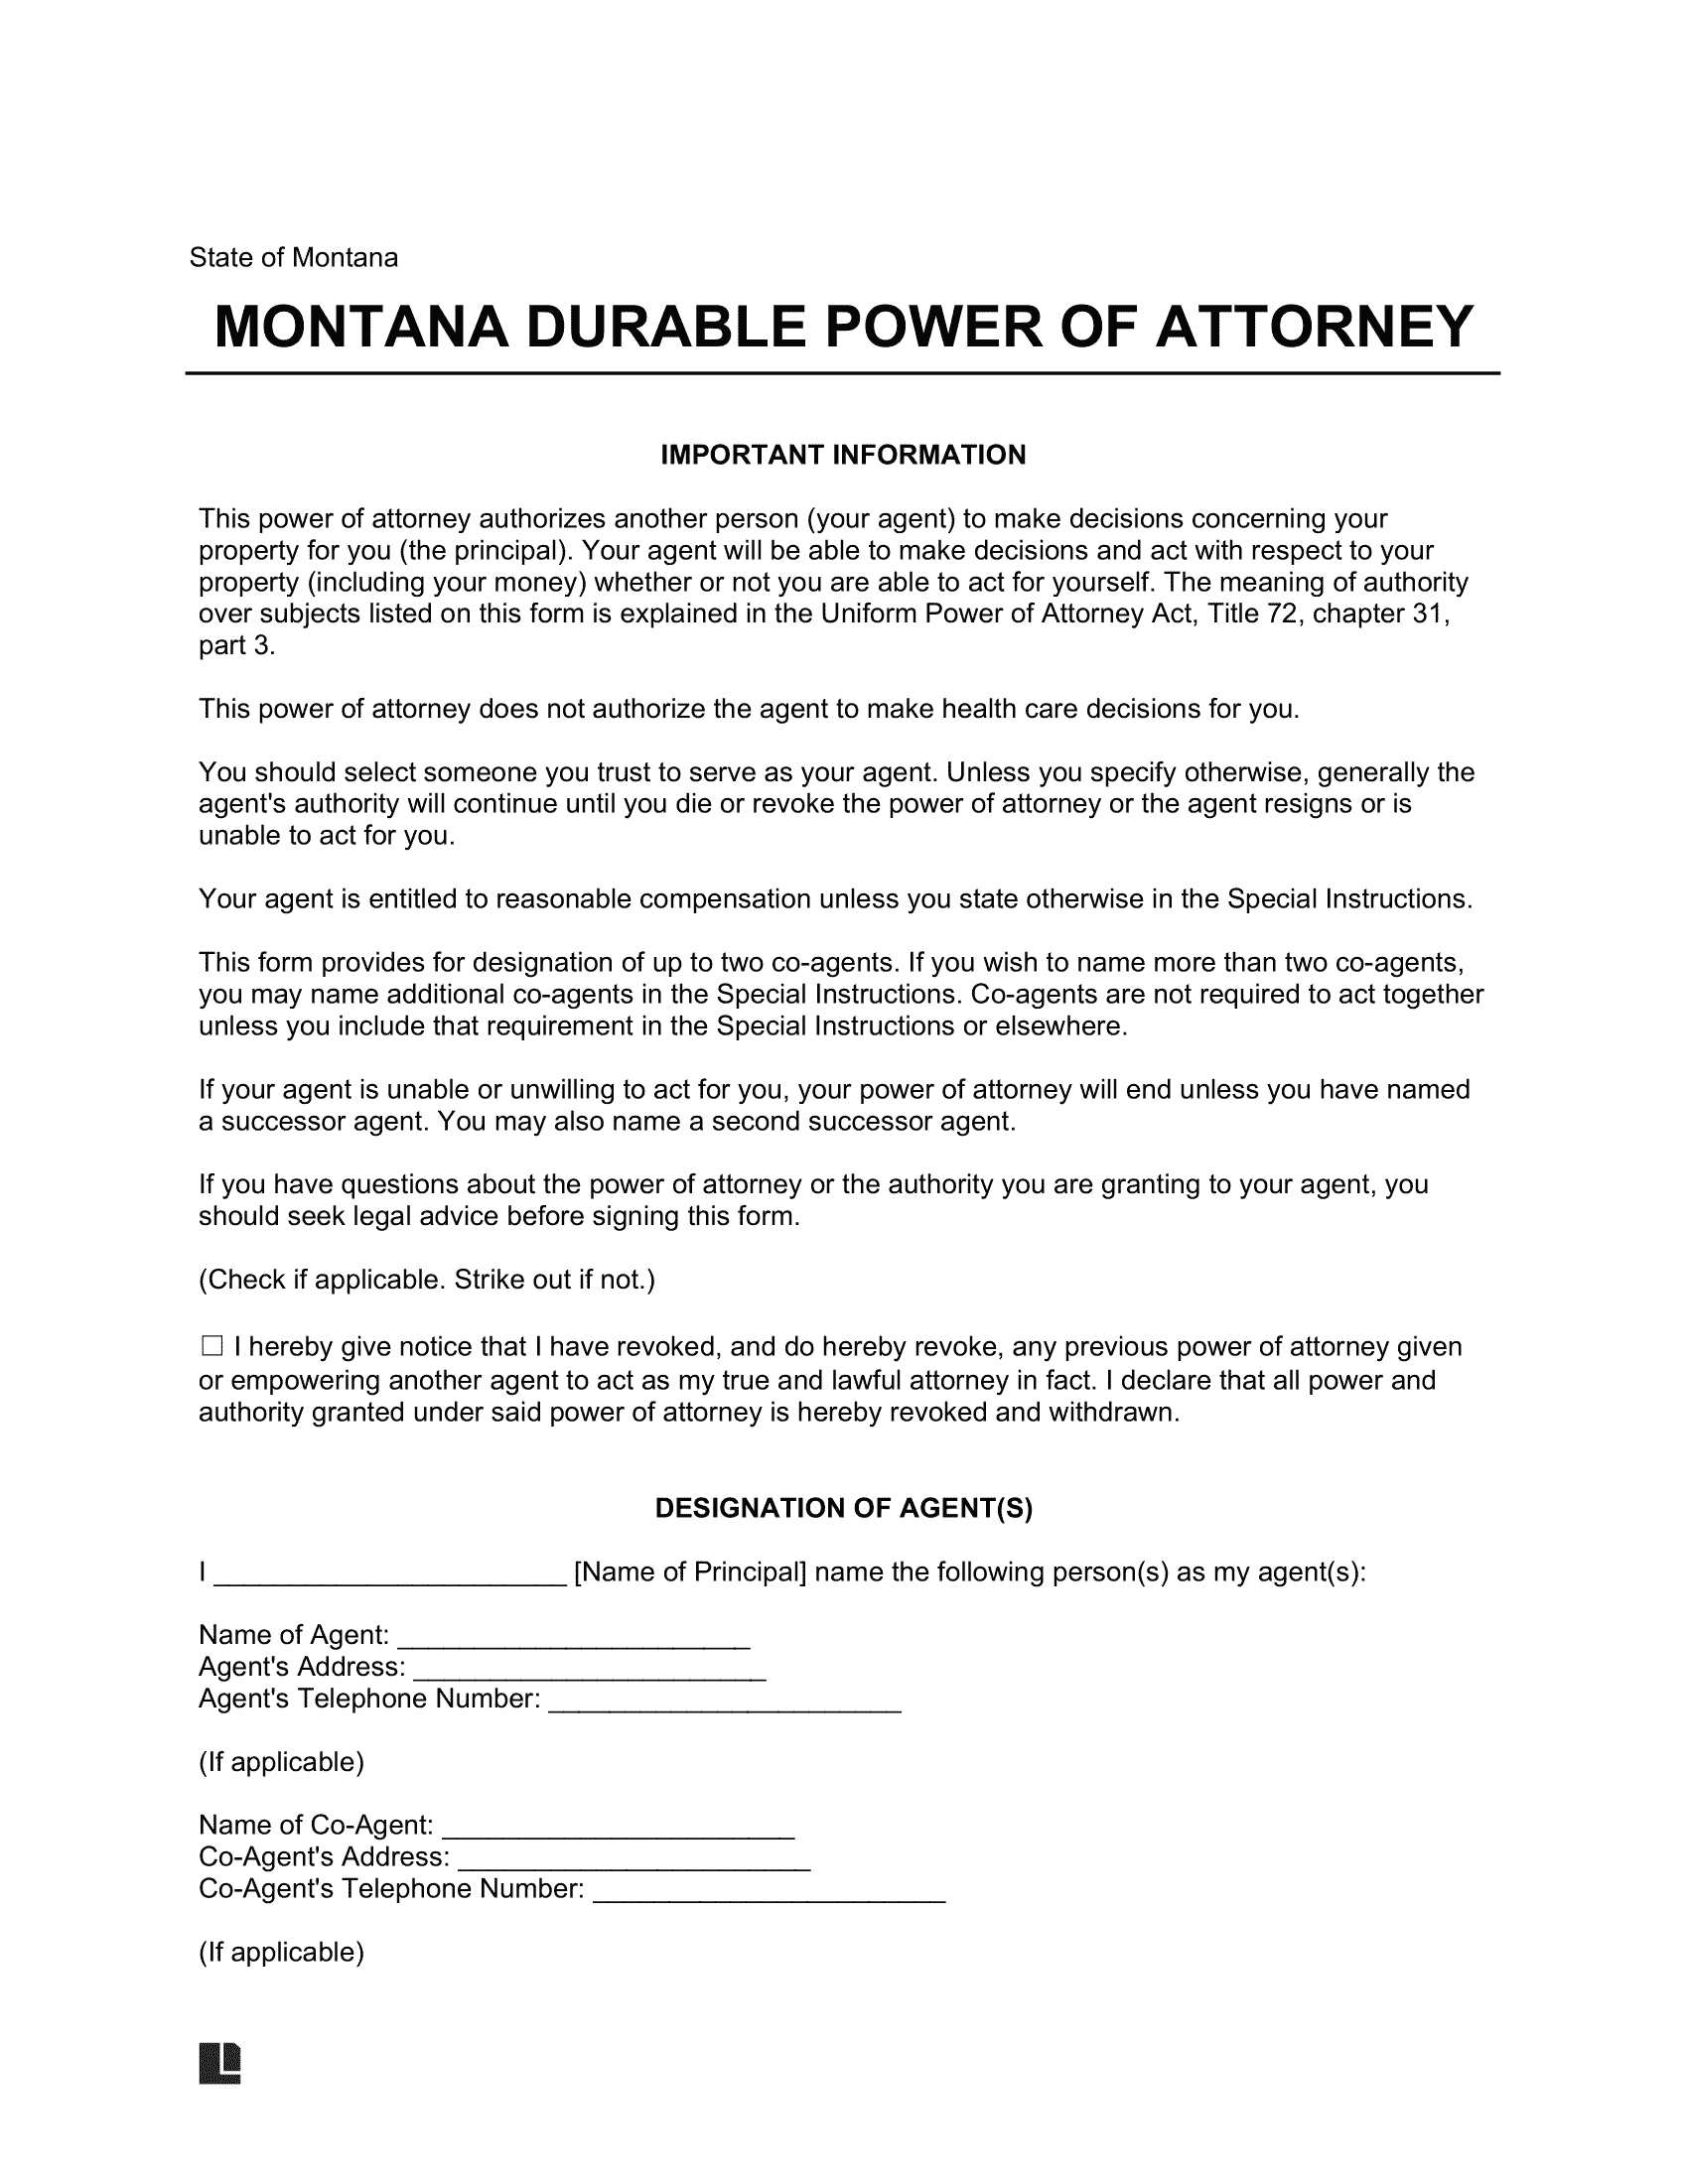 Montana Durable Statutory Power of Attorney Form